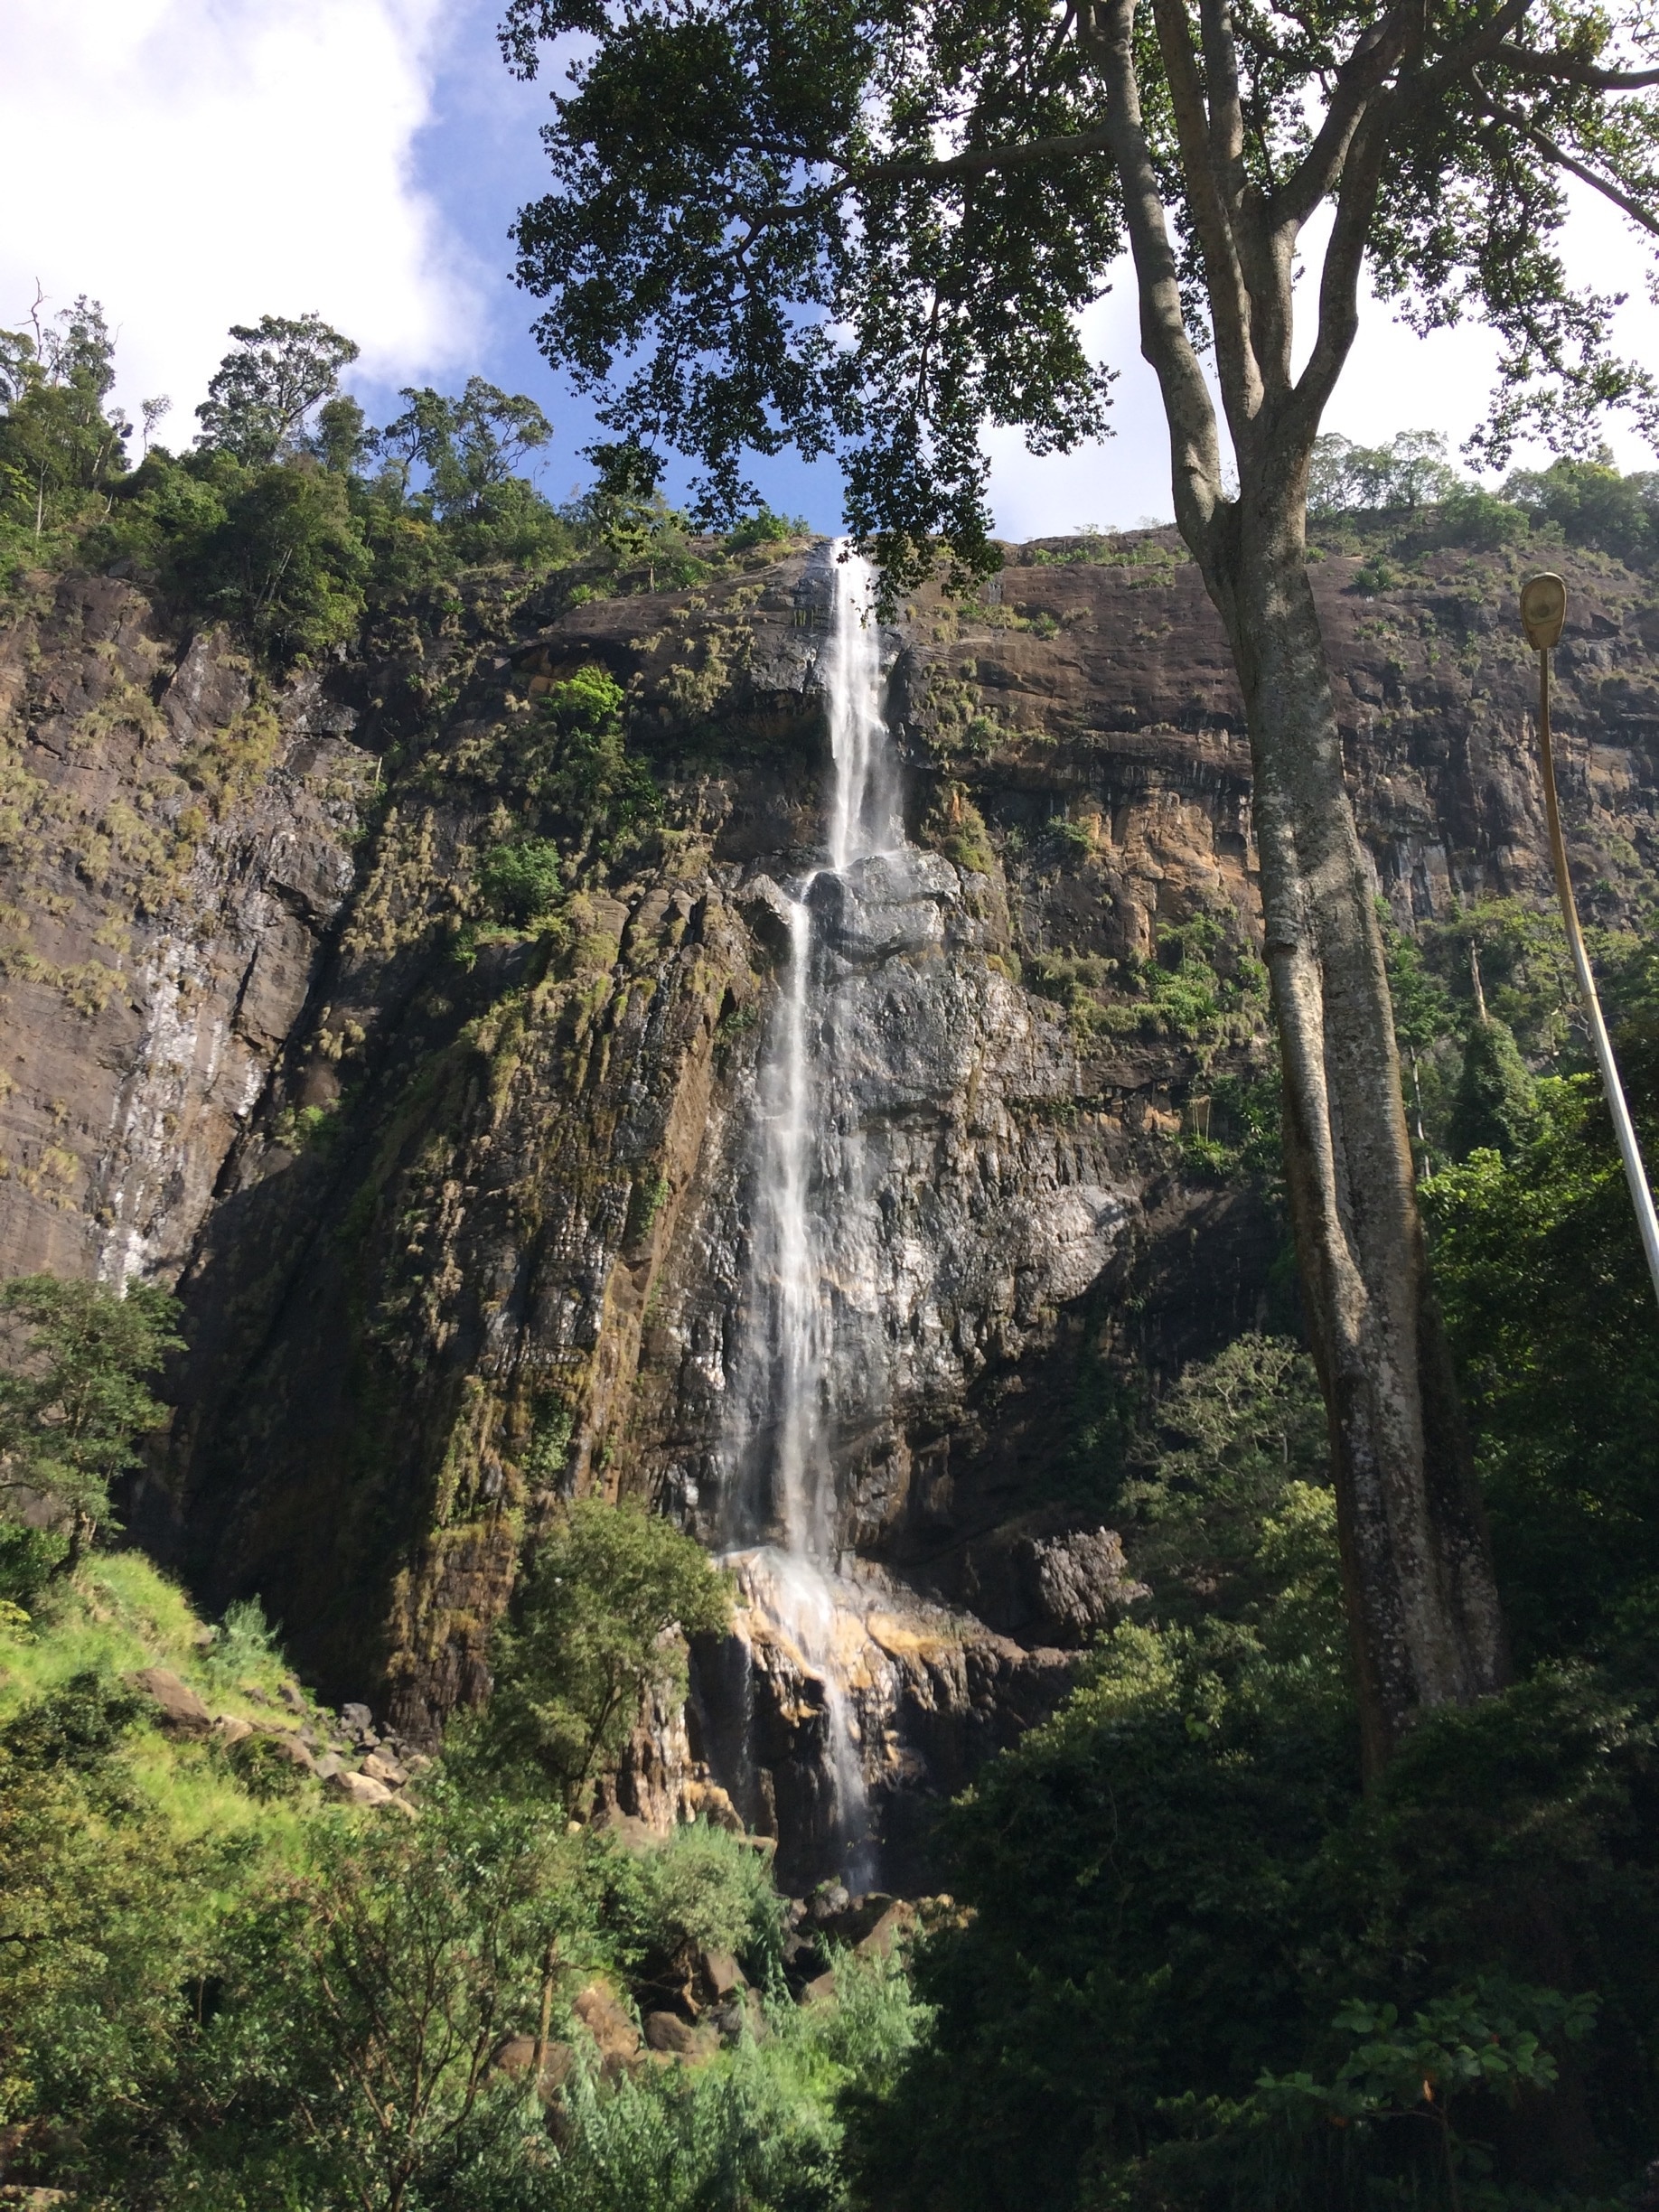 2nd tallest waterfall in Sri Lanka